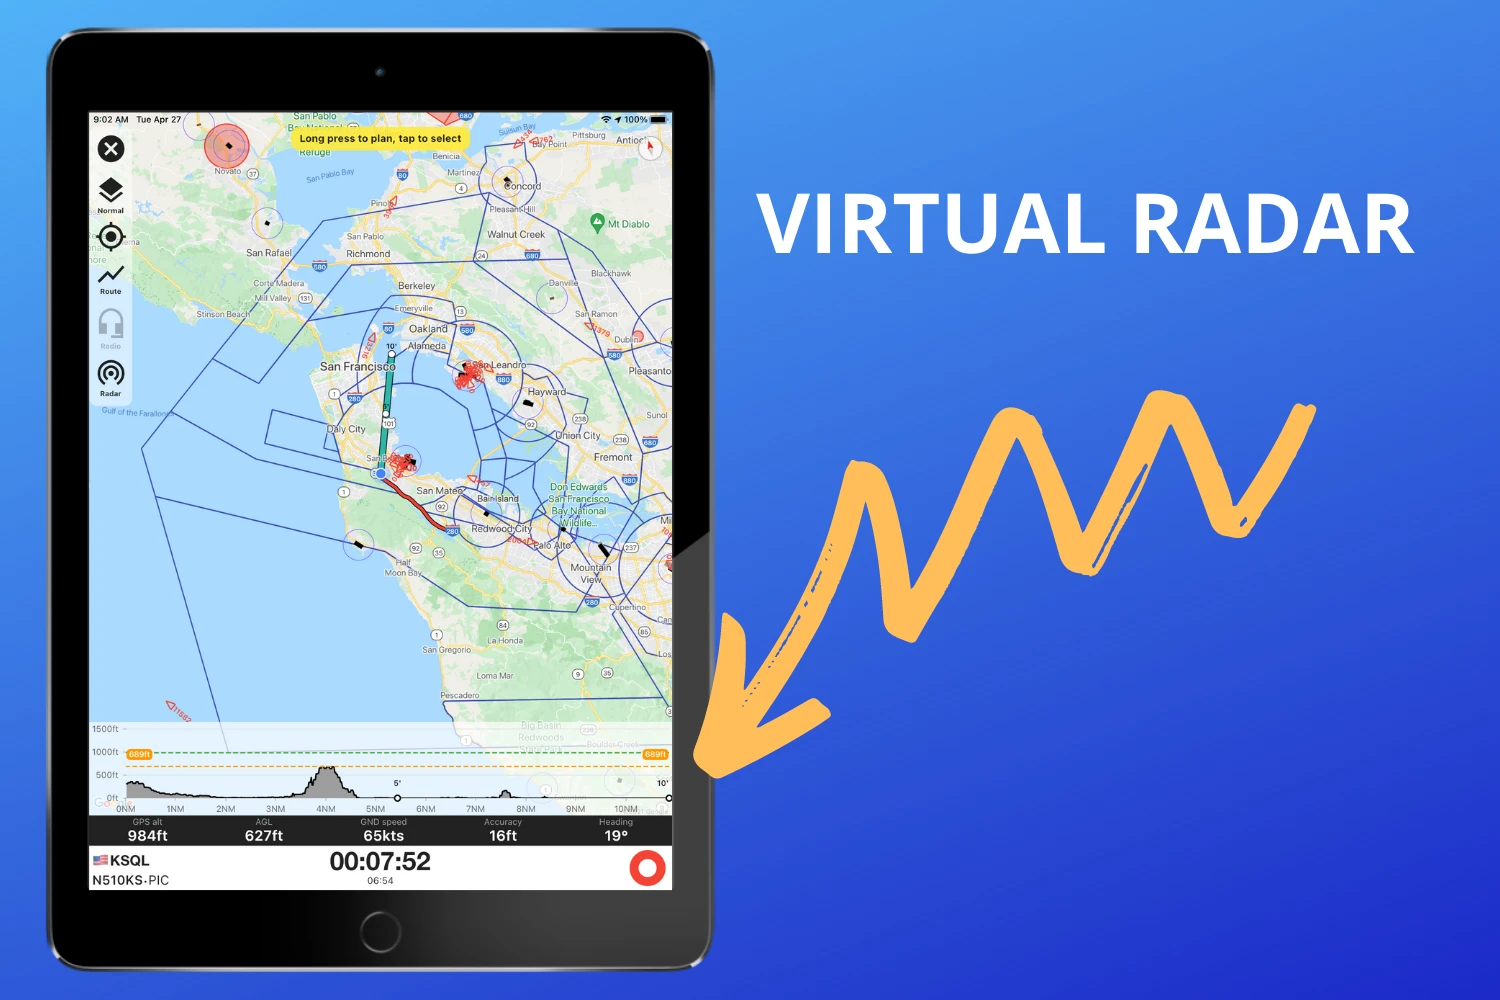 Virtual radar